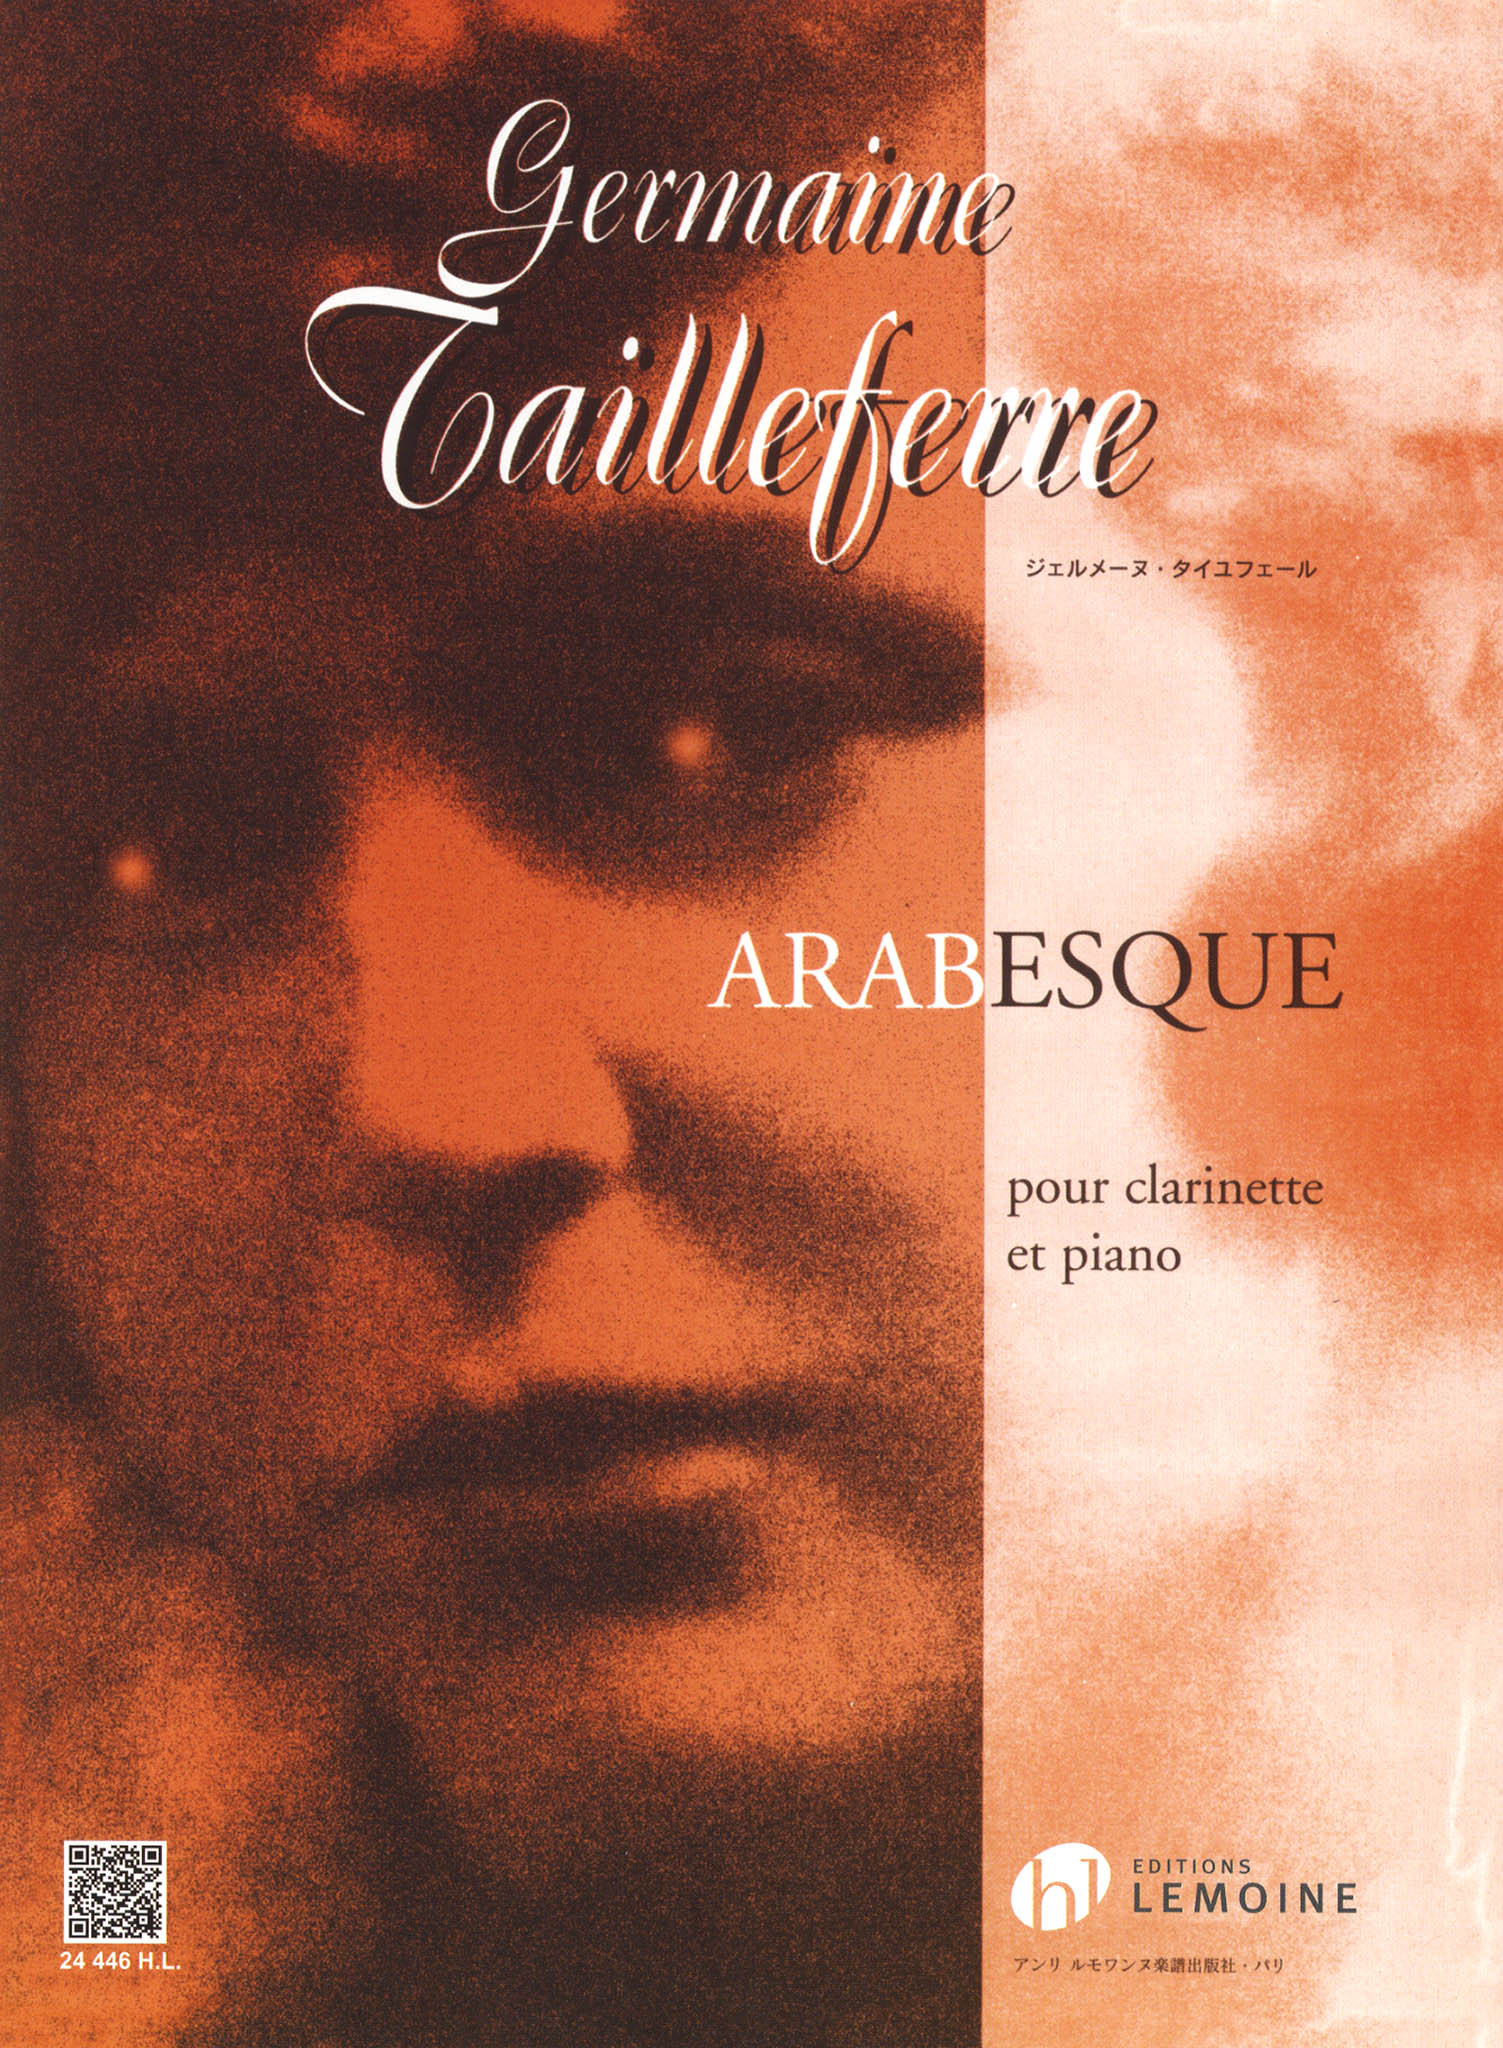 Tailleferre Arabesque clarinet and piano cover